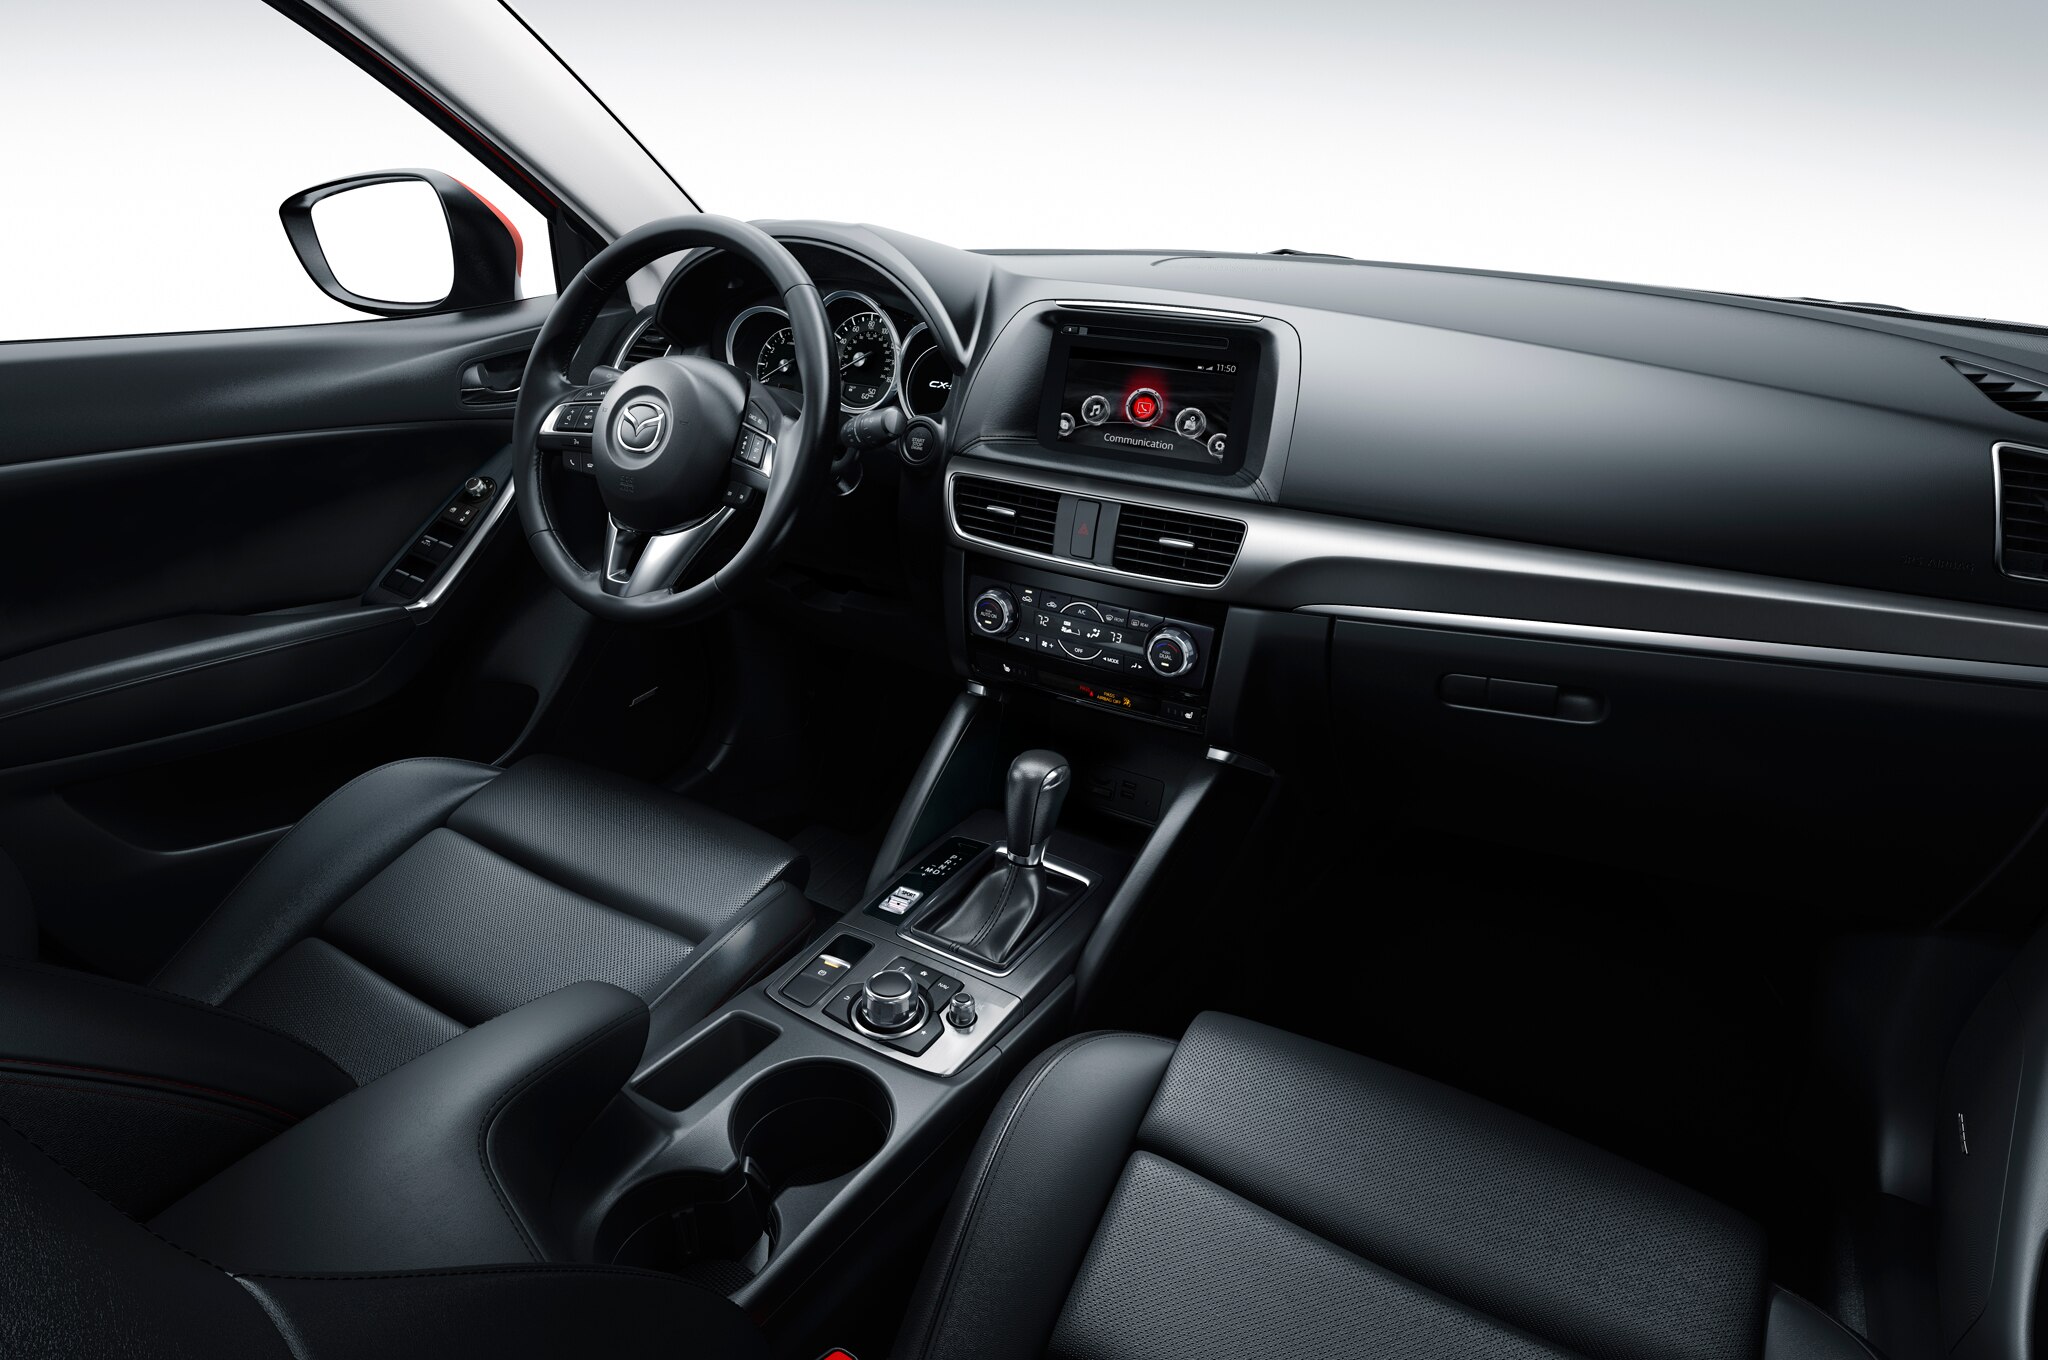 2016-Mazda-CX-5-interior-view-02.jpg